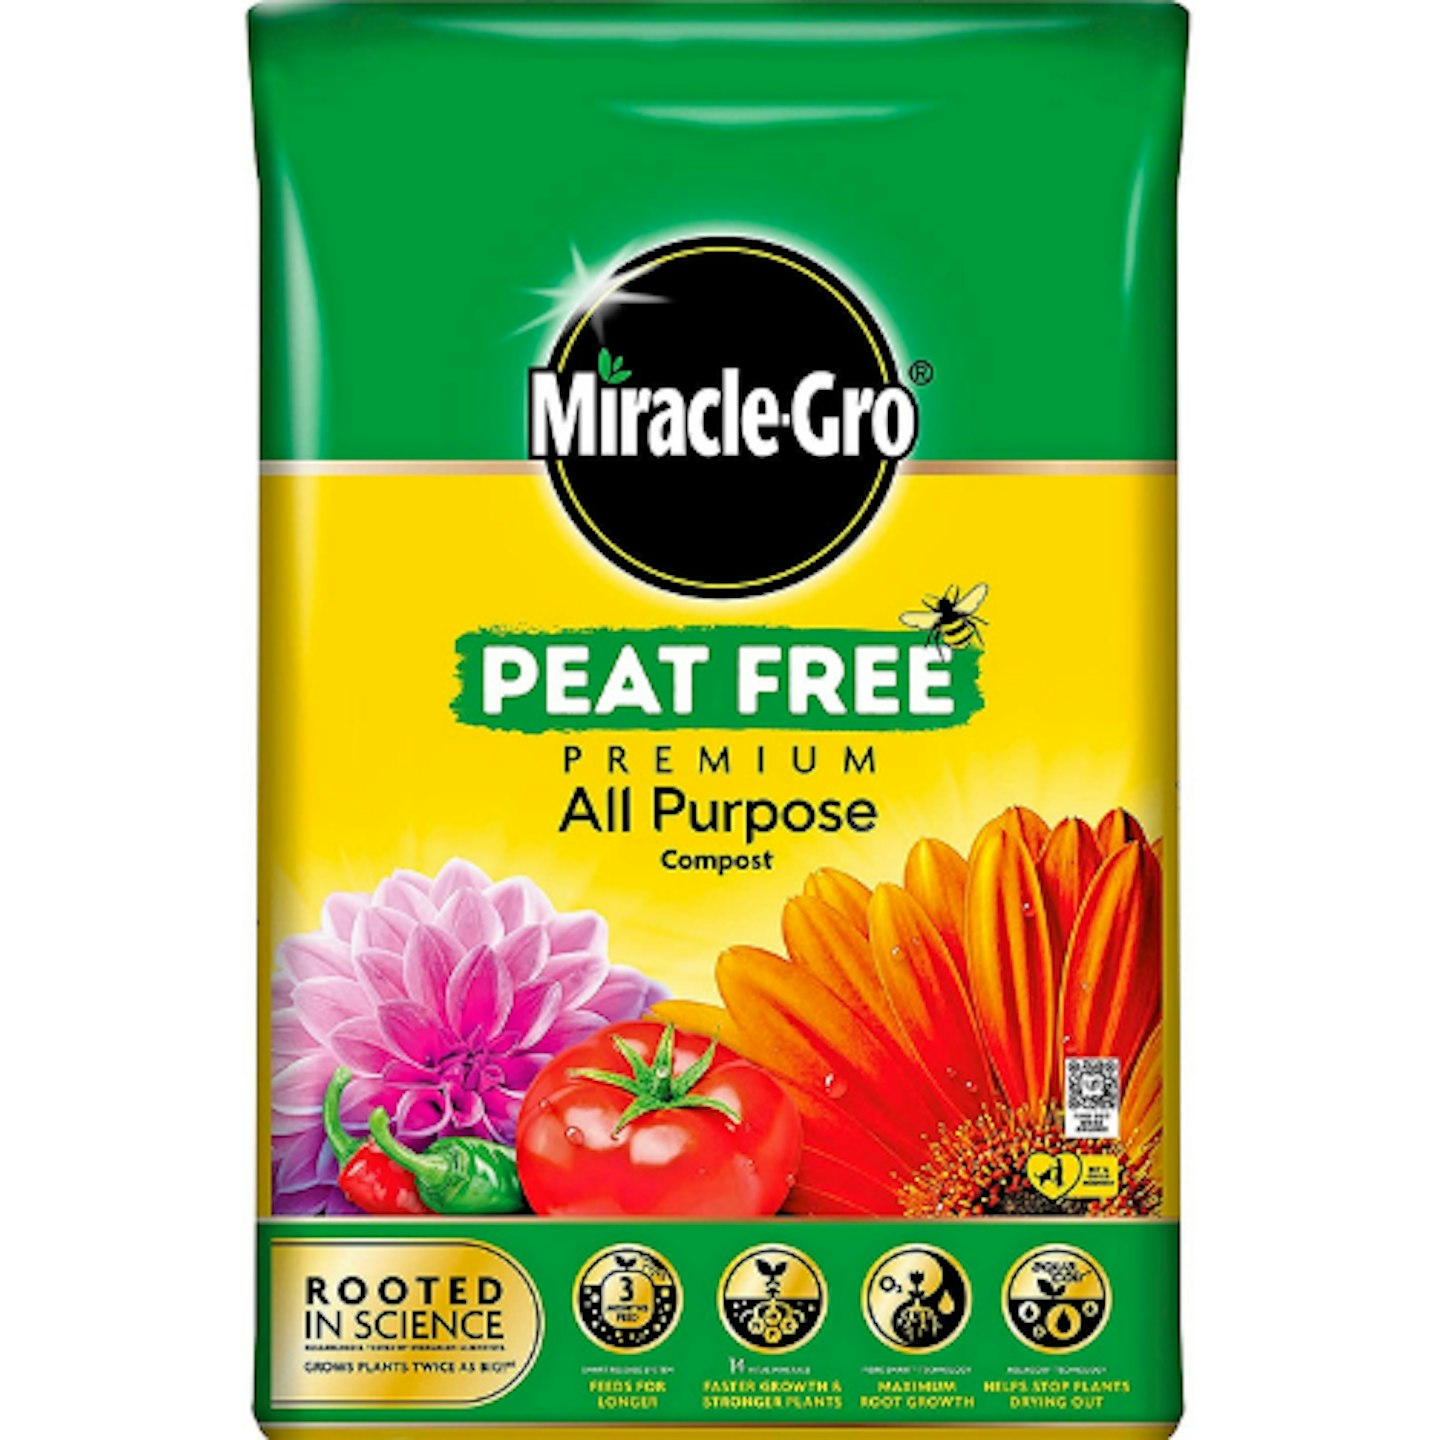 Miracle-Gro Peat-Free Premium All Purpose Compost